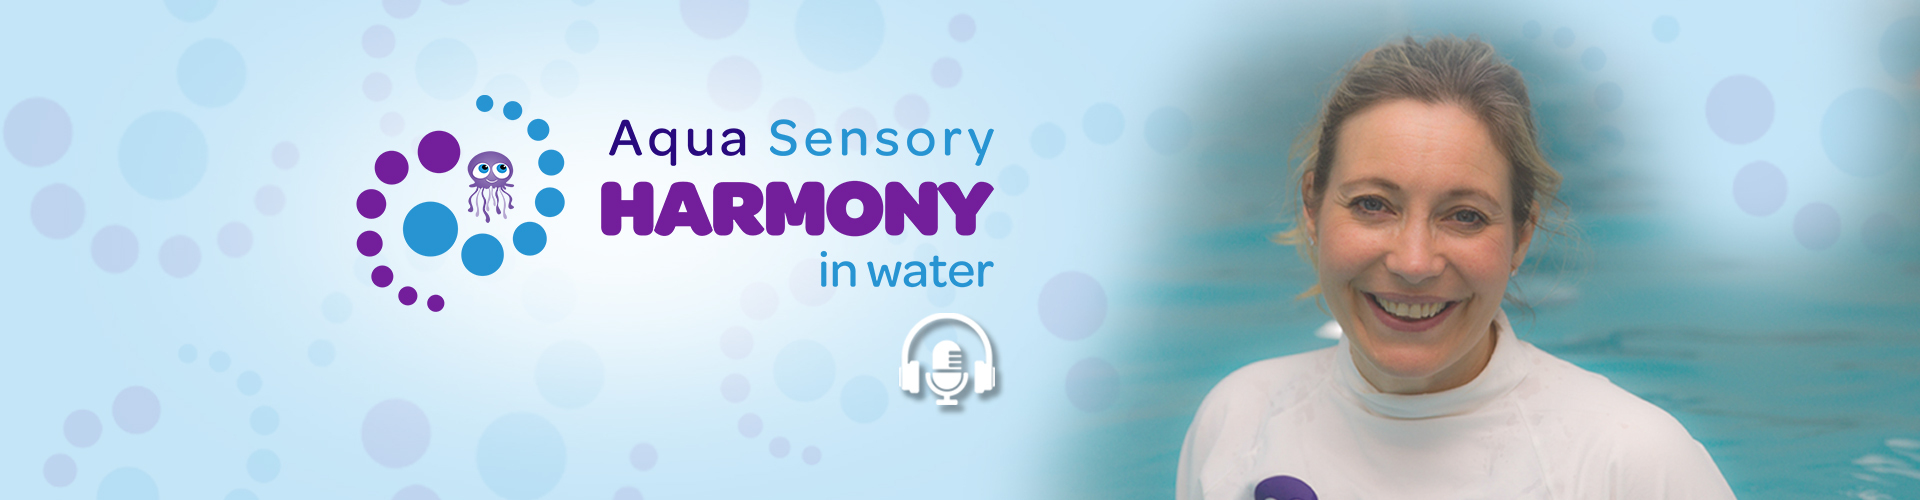 Aqua Sensory Podcast